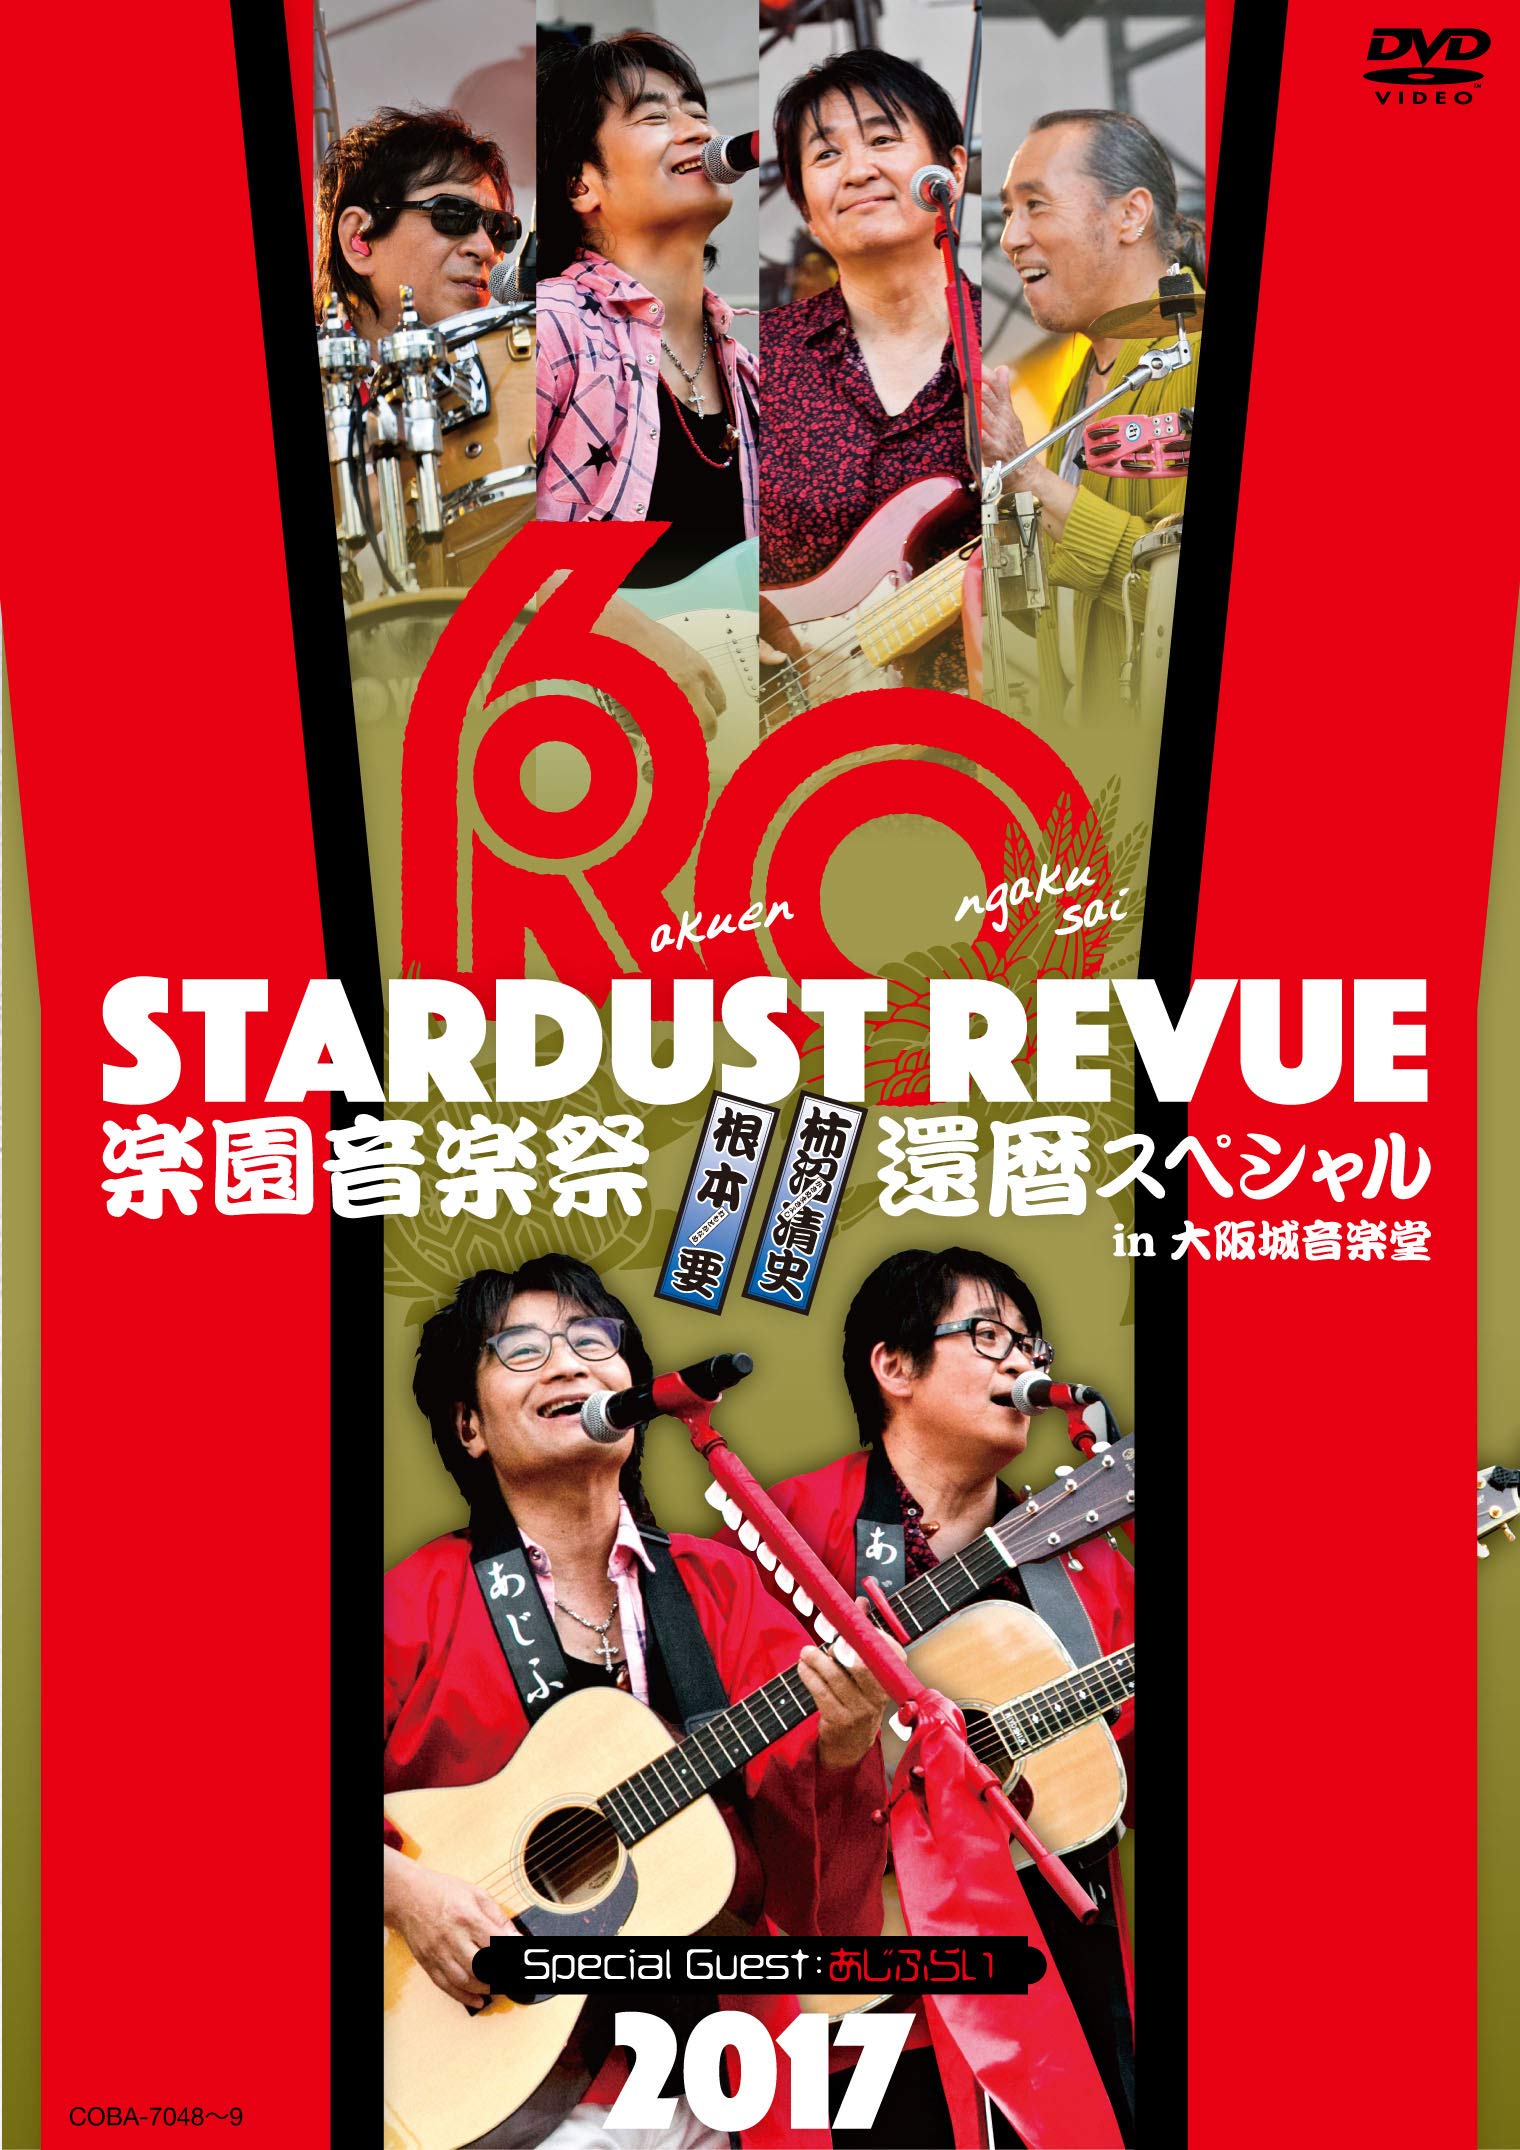 STARDUST REVUE 楽園音楽祭 2017 還暦スペシャル in 大阪城音楽堂初回生産限定盤(DVD)